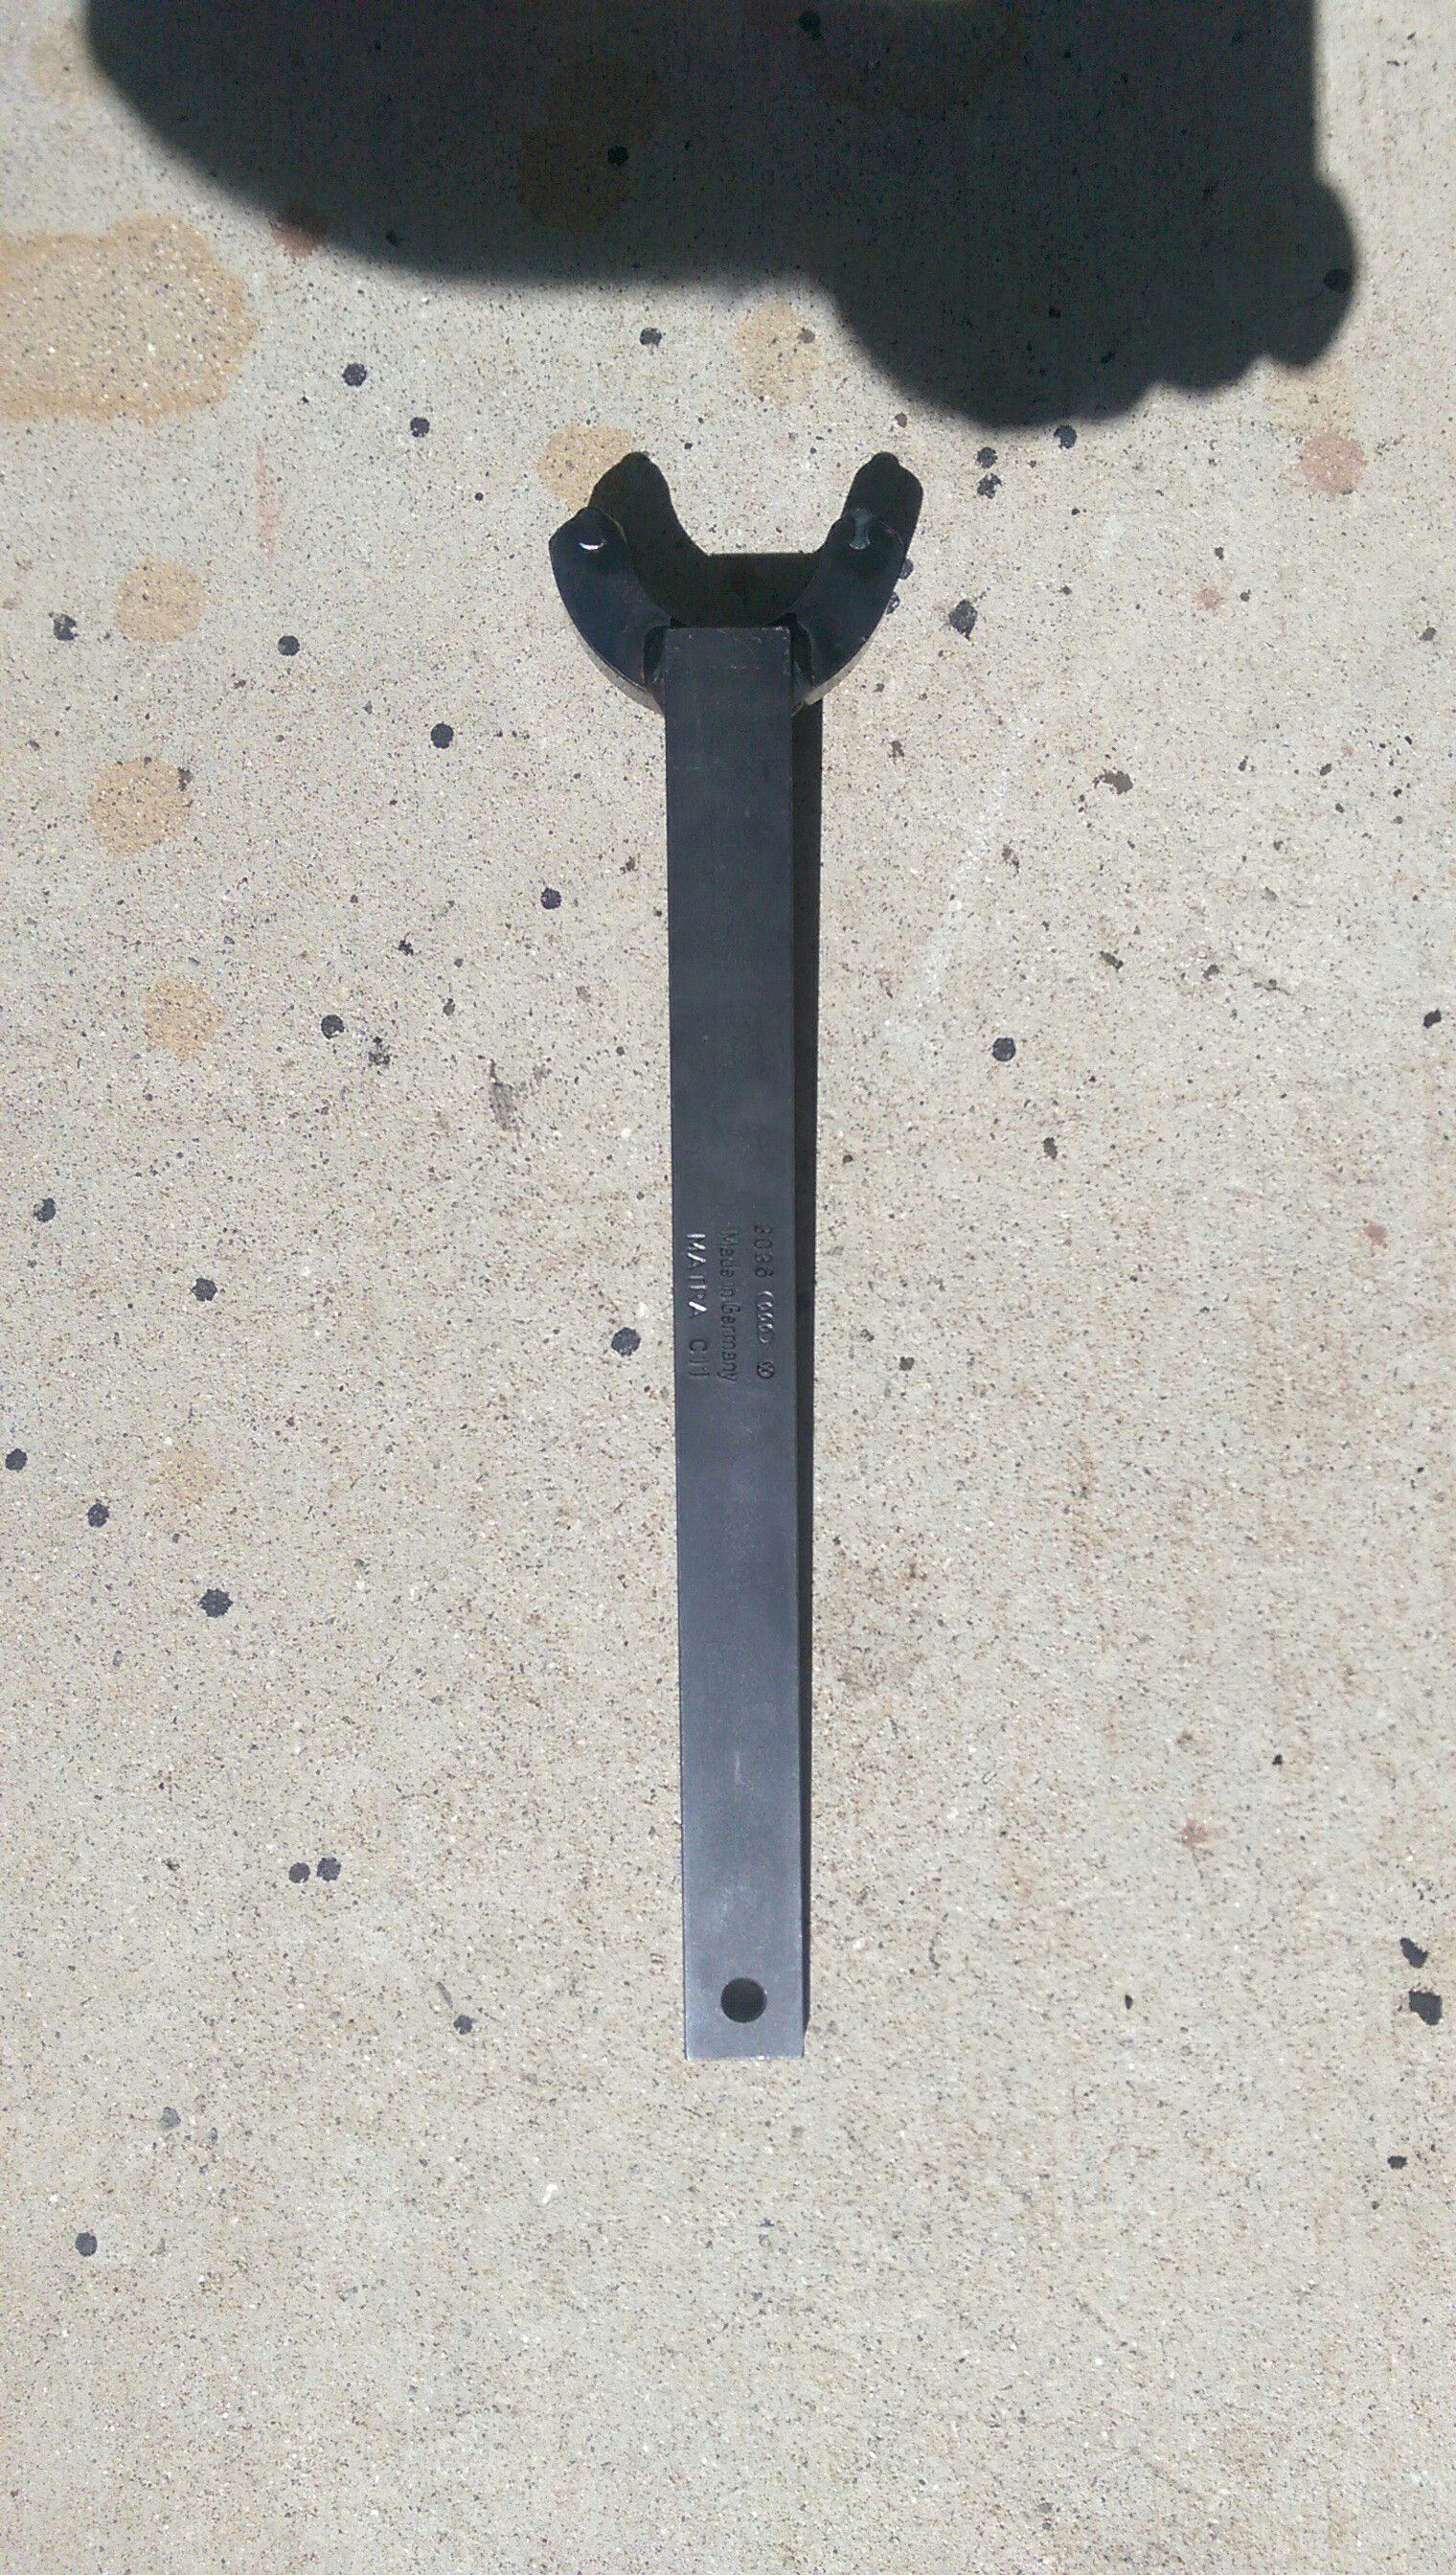 VW/Audi Camshaft Pin Wrench